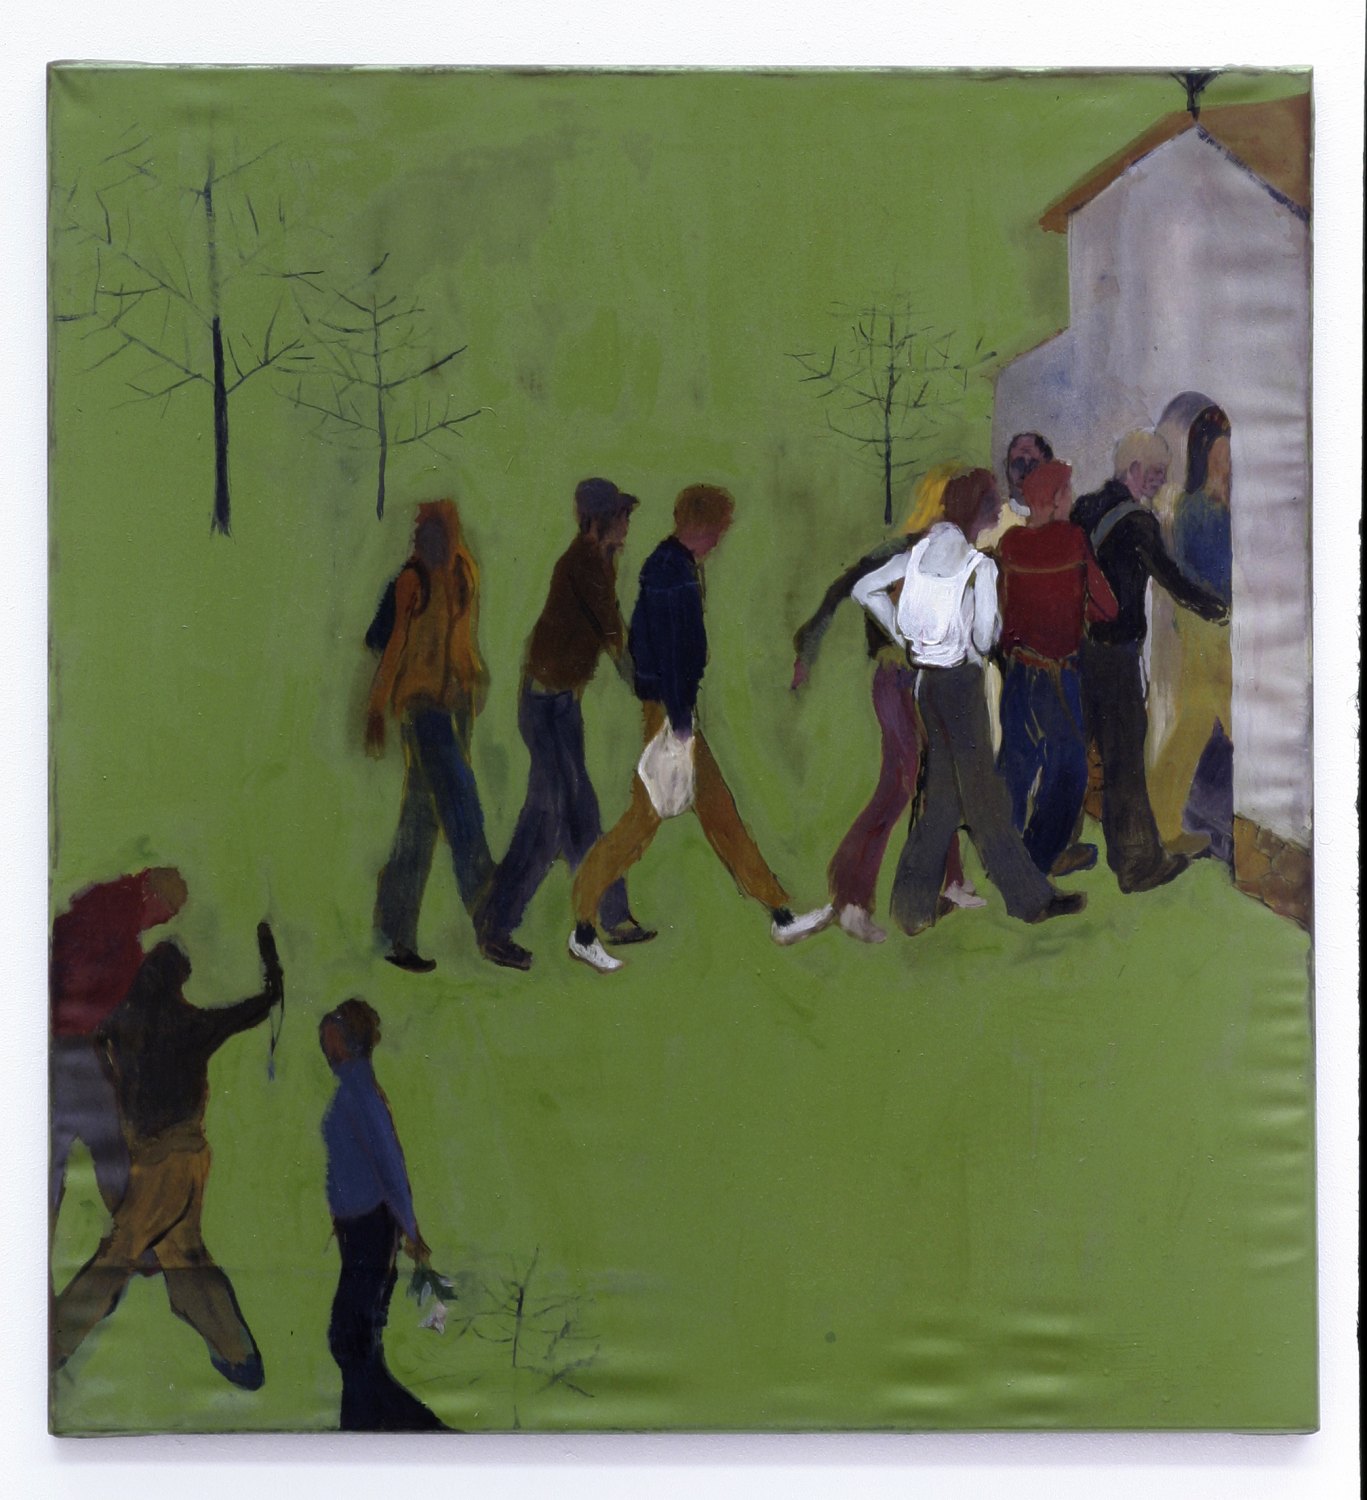 Kai Althoff Untitled, 2004 Oil on canvas, 70 × 64.5 cm